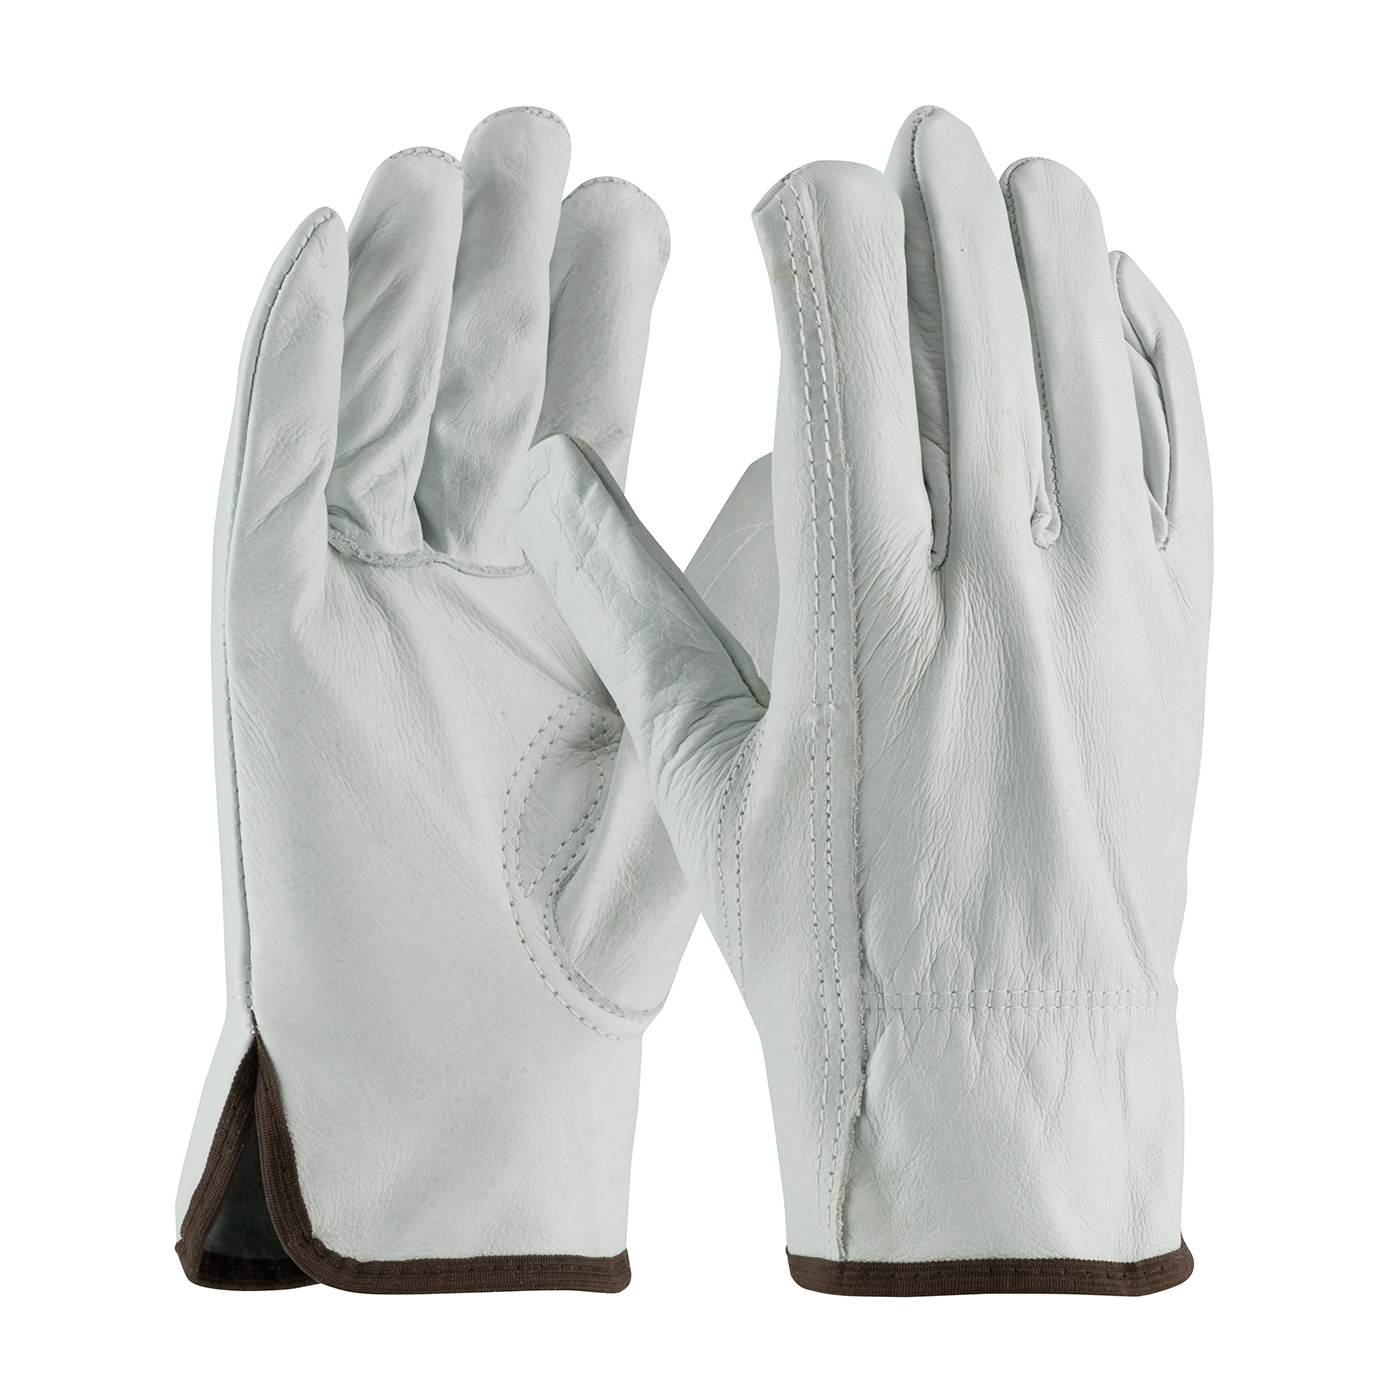 PIP 68-165/XL Superior Grade Top Grain Cowhide Leather Drivers Glove - Keystone Thumb - X-Large PID-68 165 XL